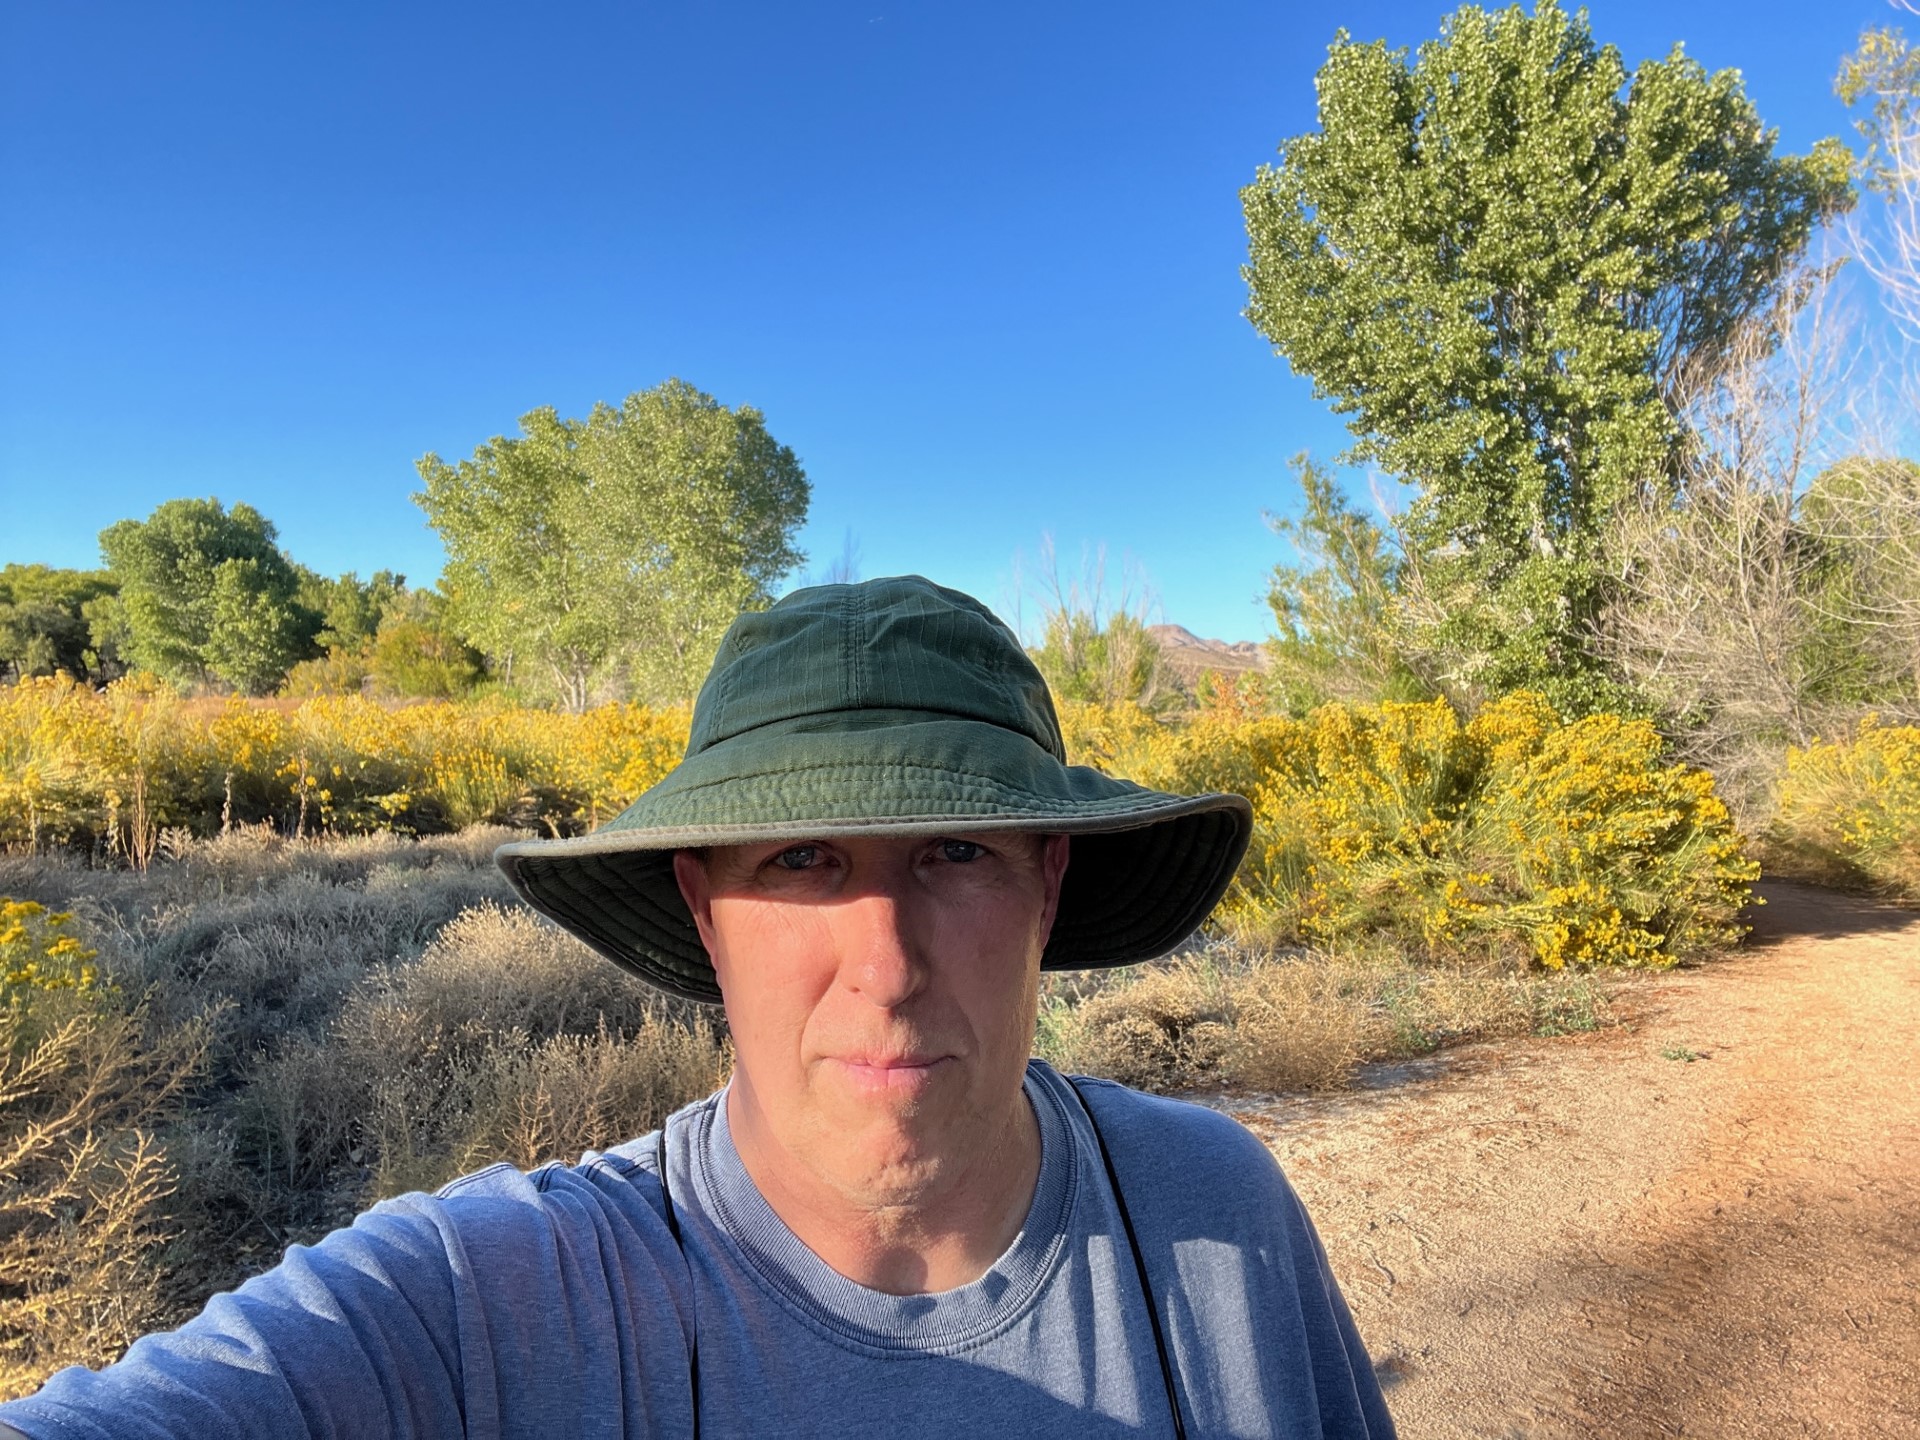 Daryl hiking in beautiful sunny southern Nevada